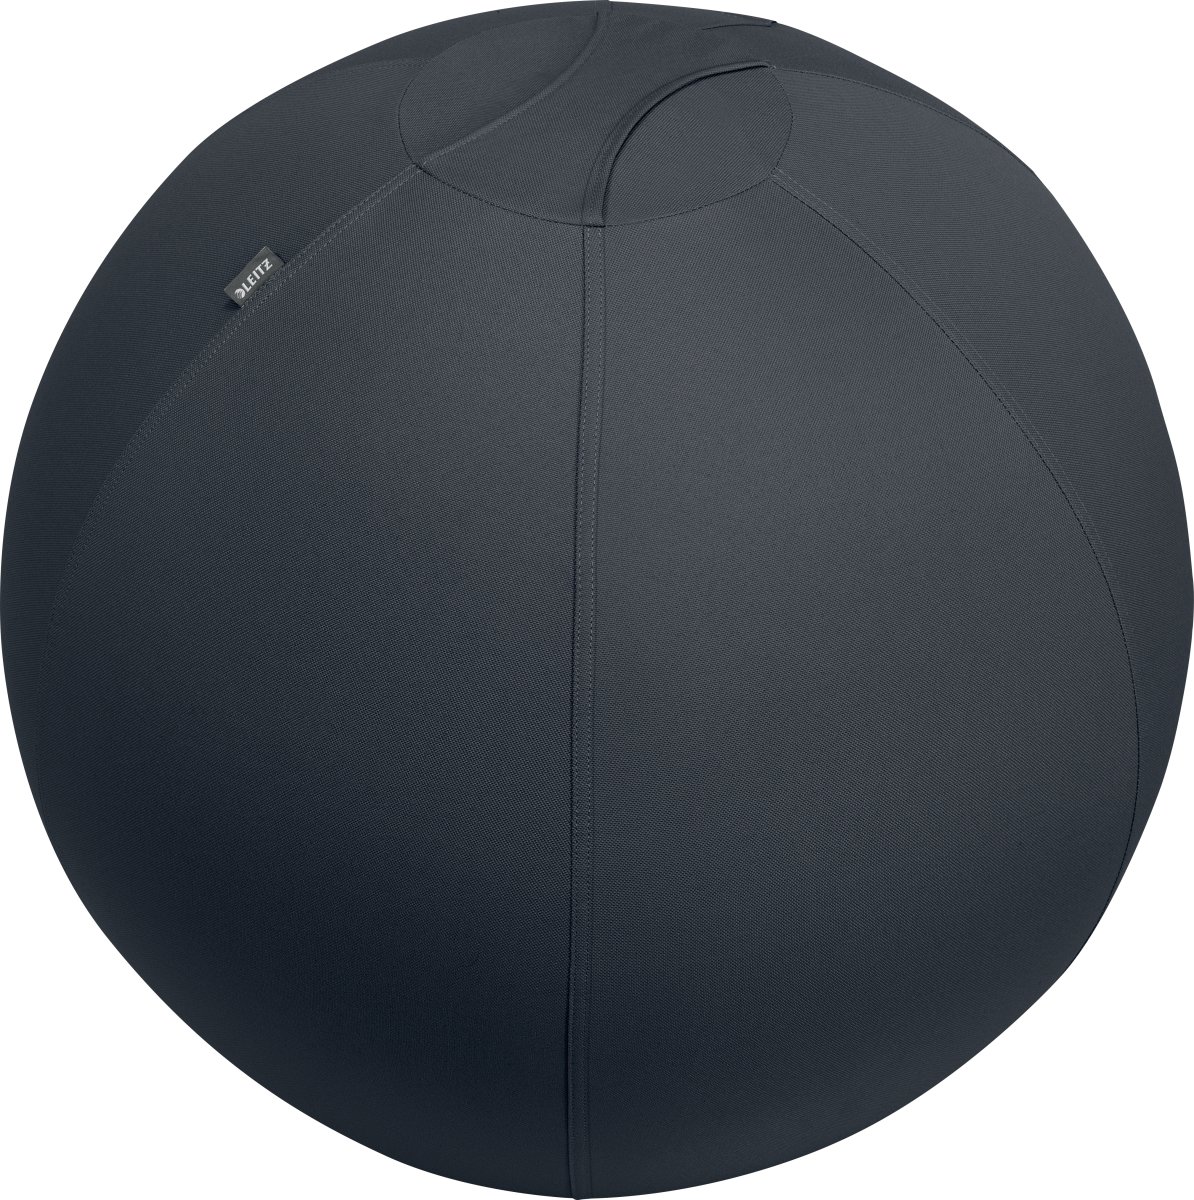 Leitz Ergo Active balancebold, sort, 75 cm